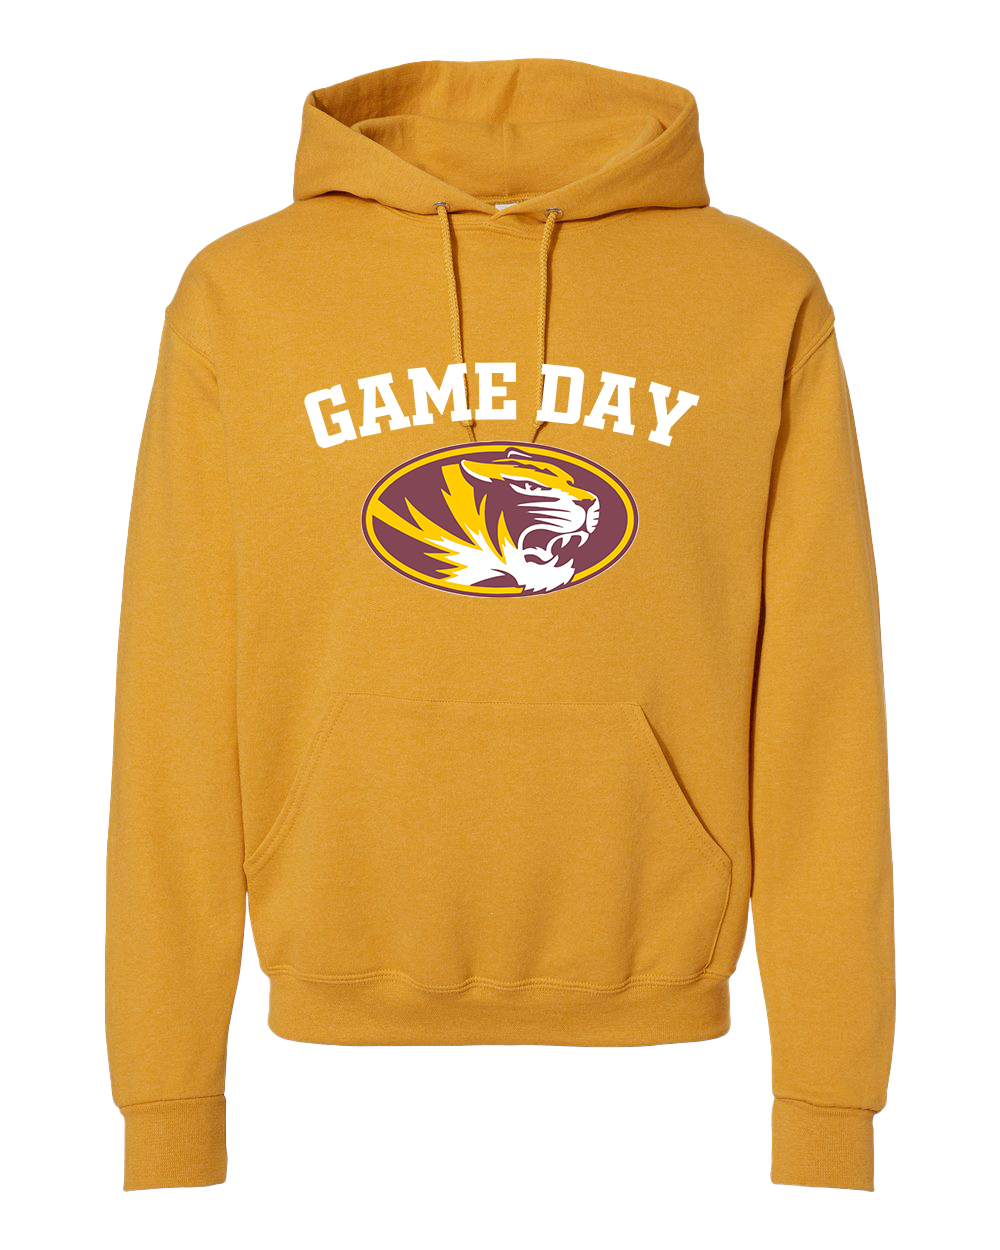 Tigers Game Day Hooded Sweatshirt - Mustard